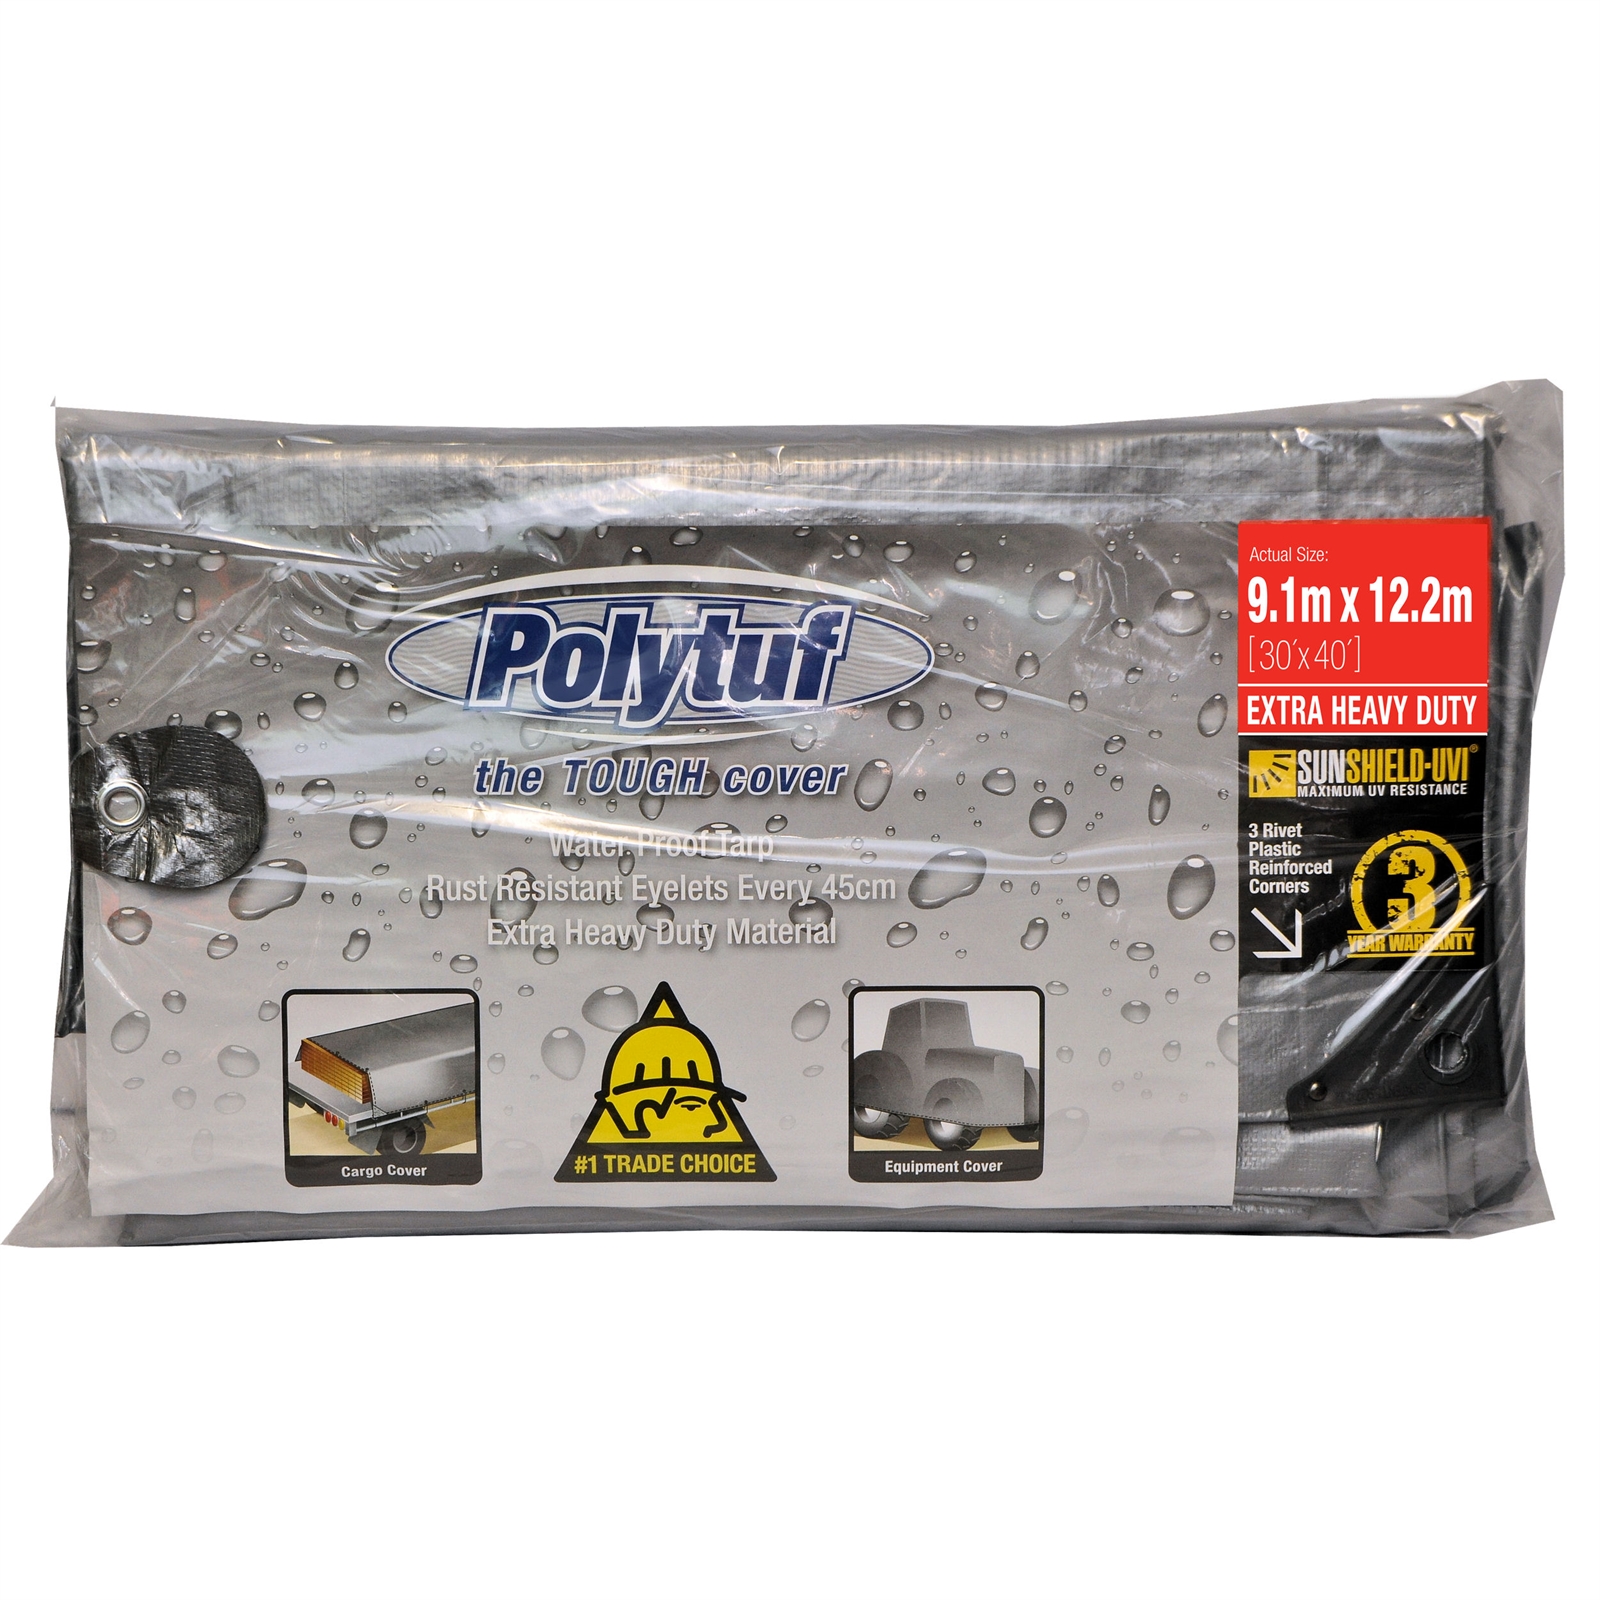 Polytuf 9.1 x 12.2m Silver and Black Extra Heavy Duty Tarpaulin